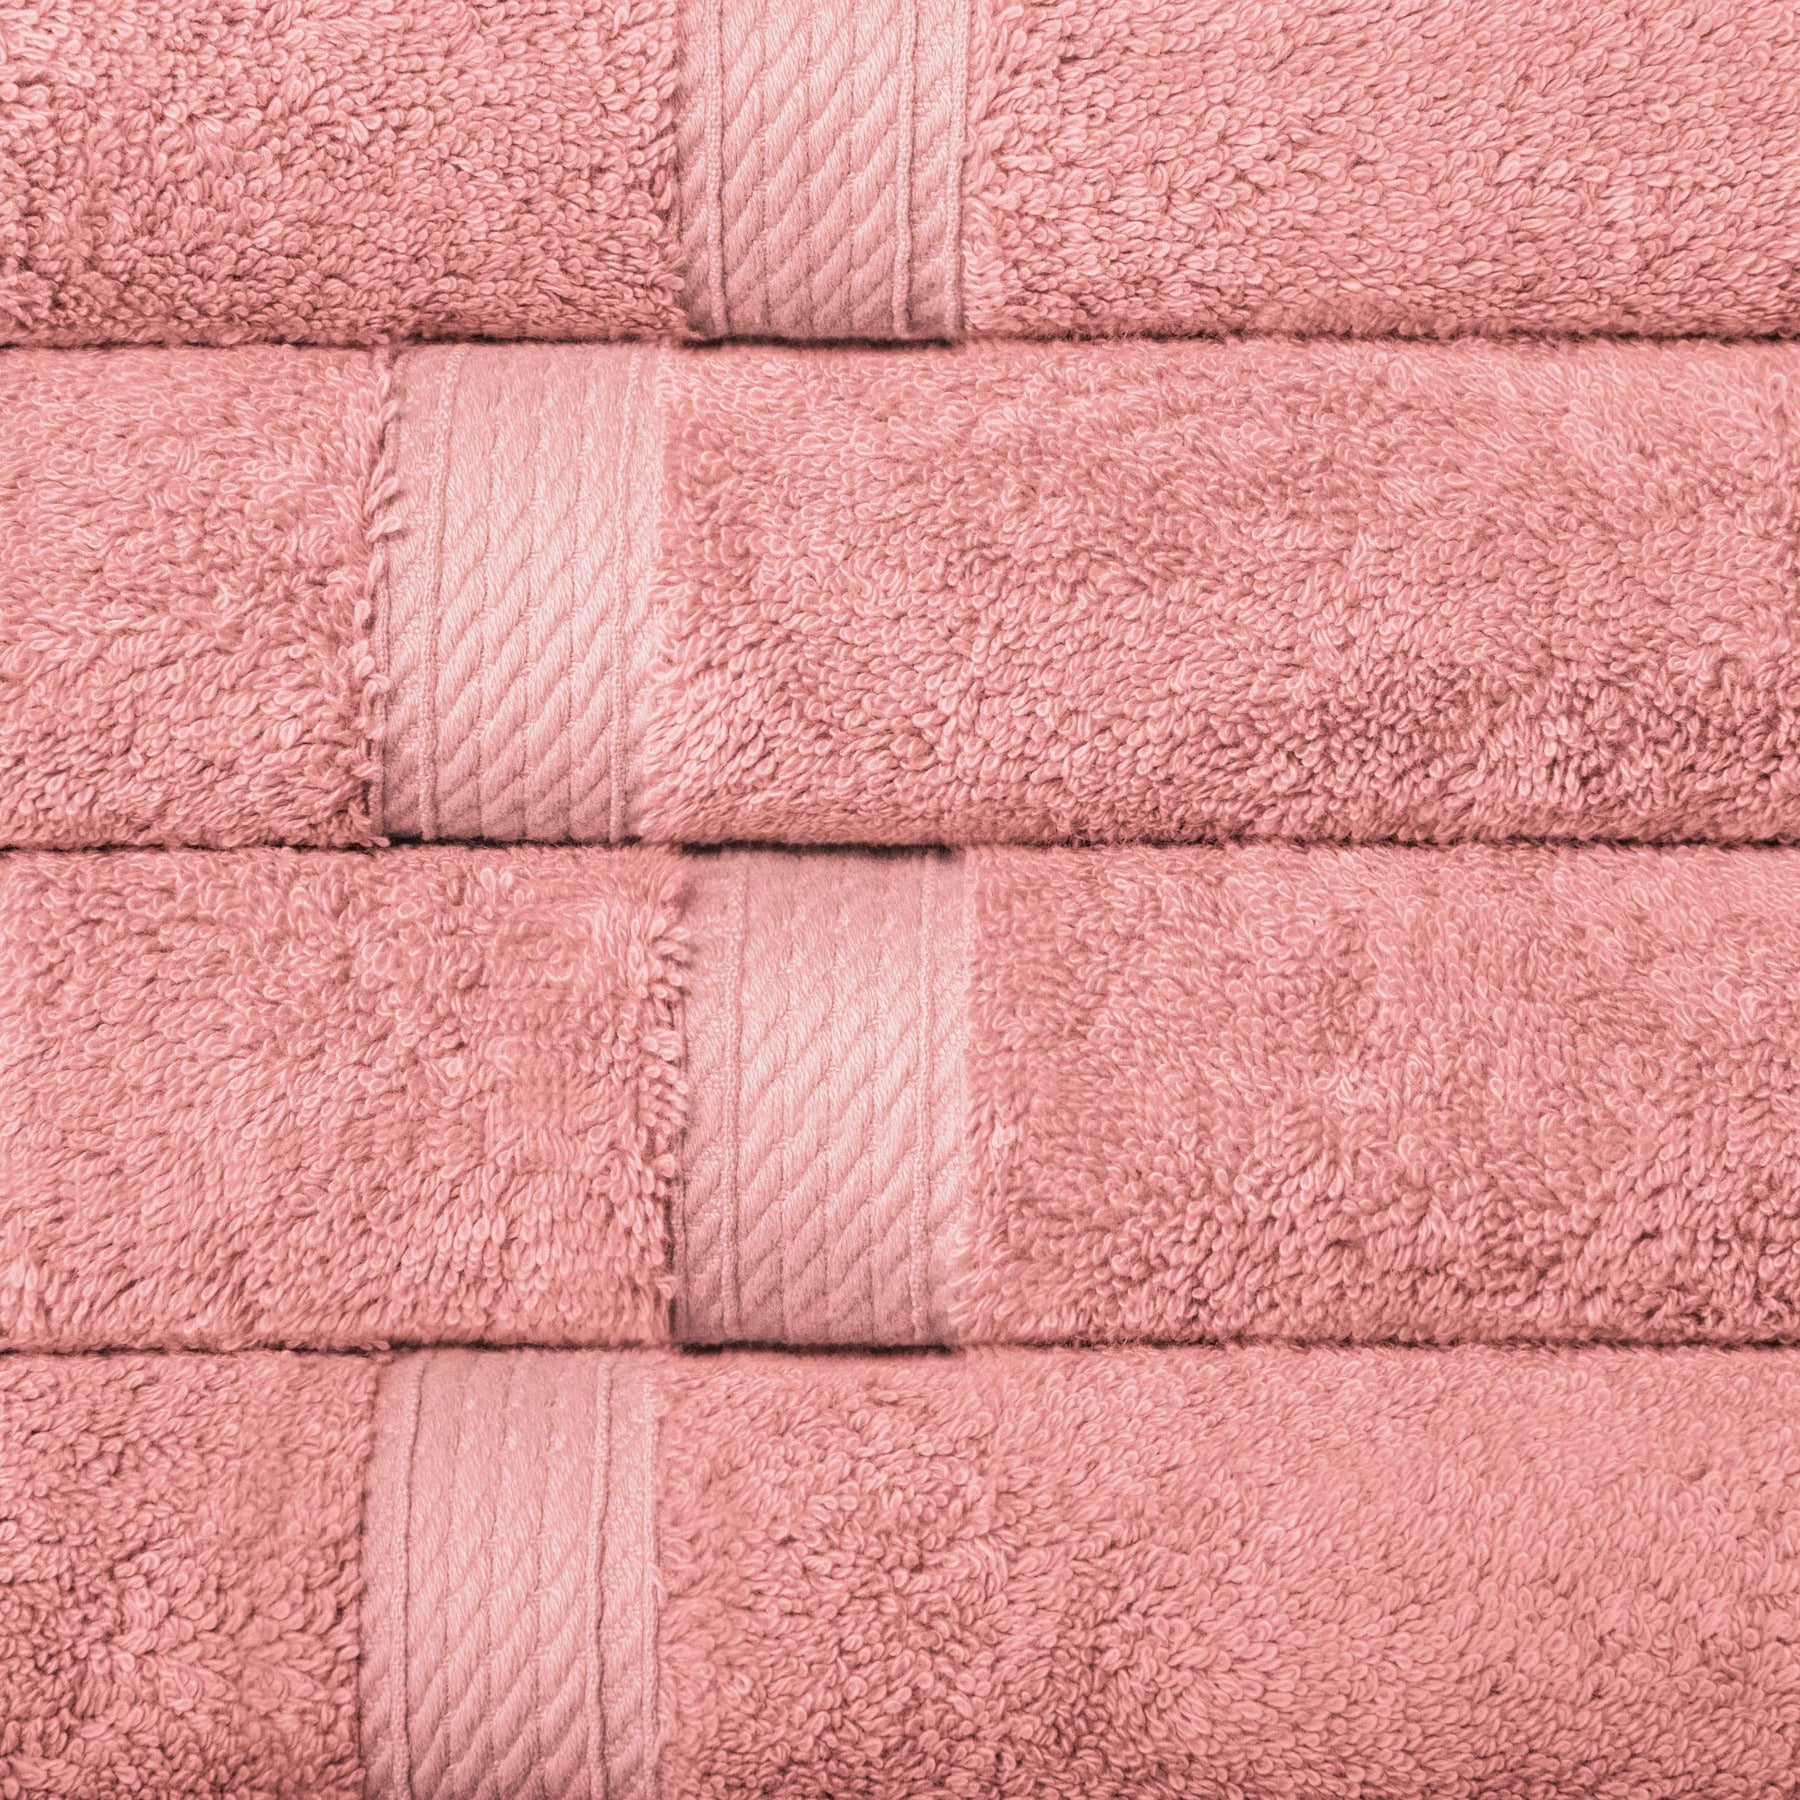 Superior Egyptian Cotton Plush Heavyweight Absorbent Luxury Soft Bath Towel - Teal Rose